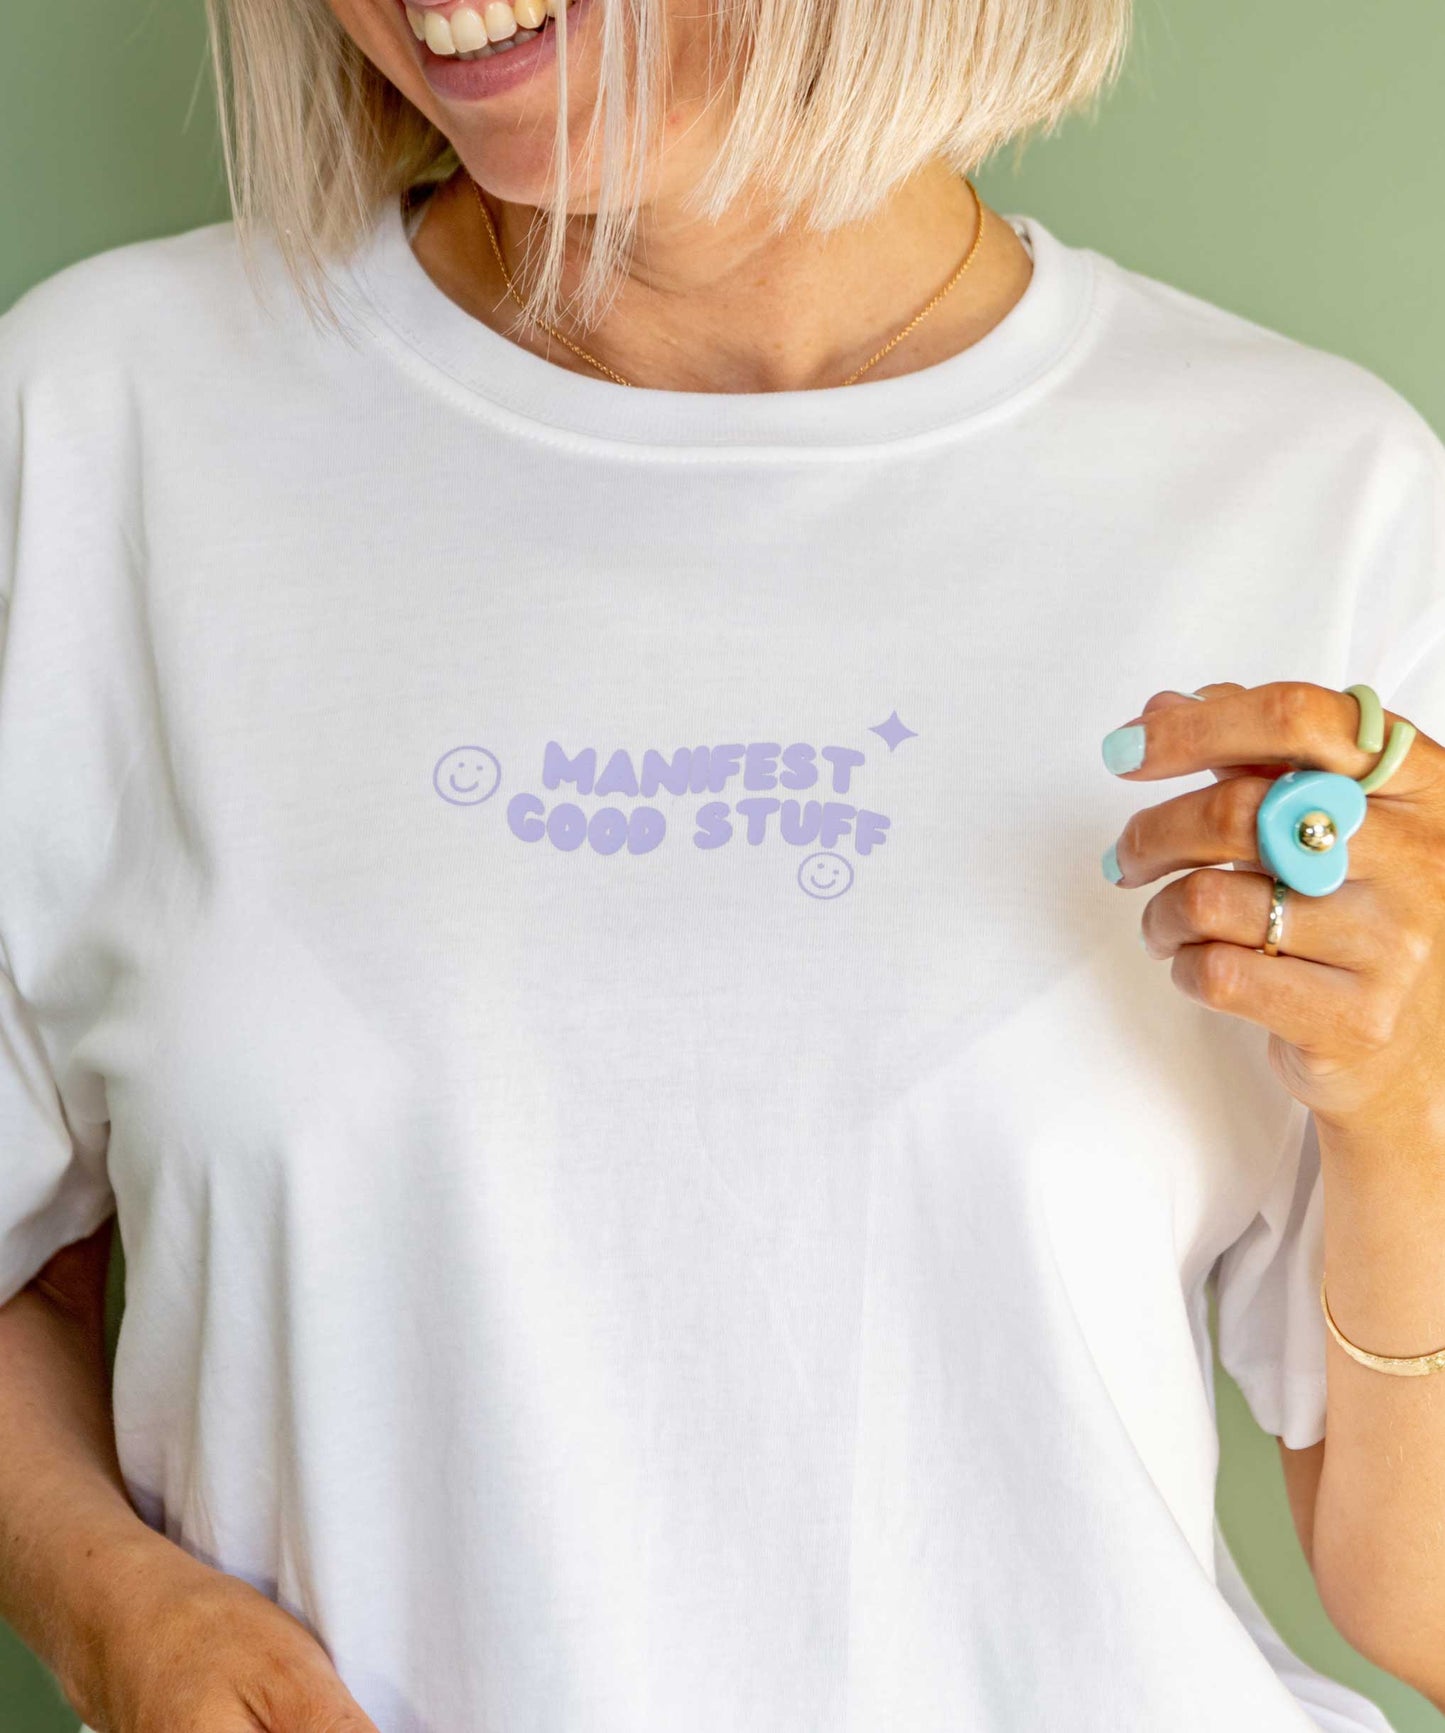 Manifest Good Stuff List Organic T-shirt